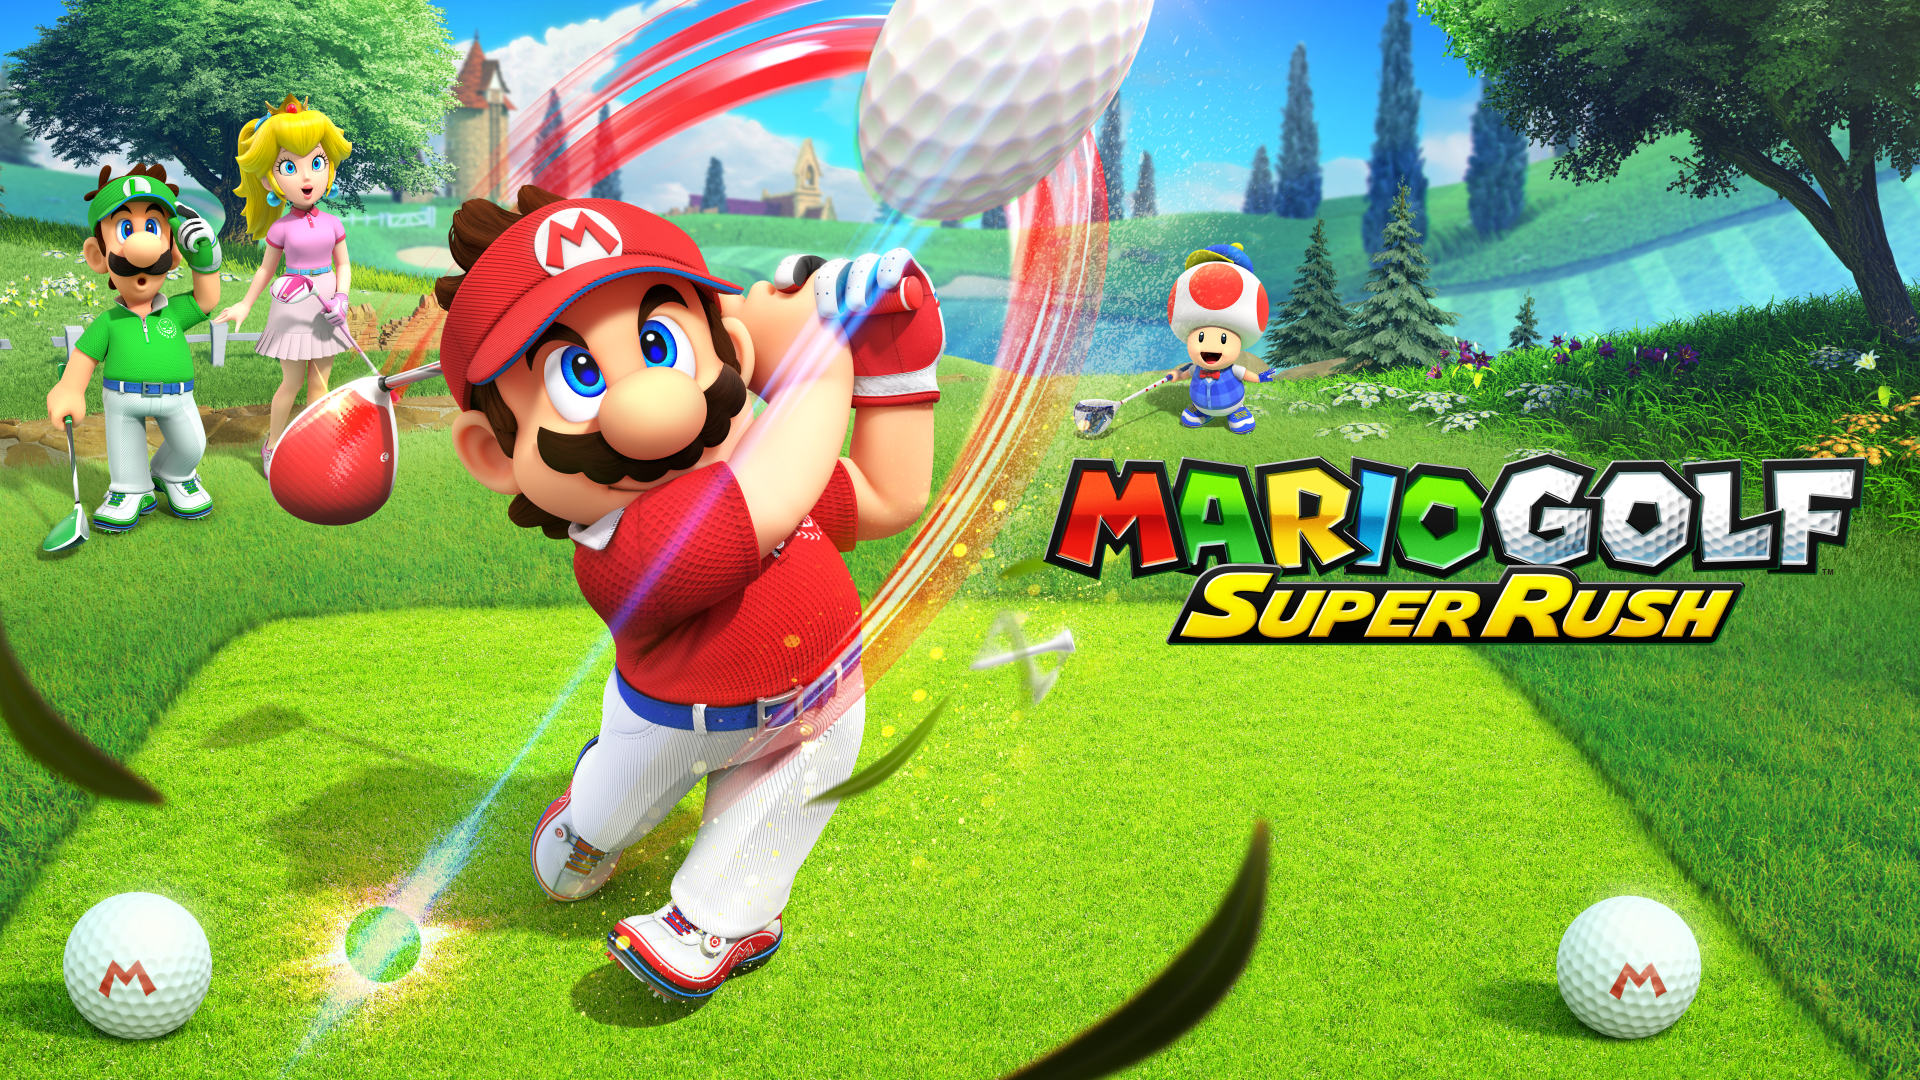 Mario Golf: Super Rush HD Wallpaper and Background Image